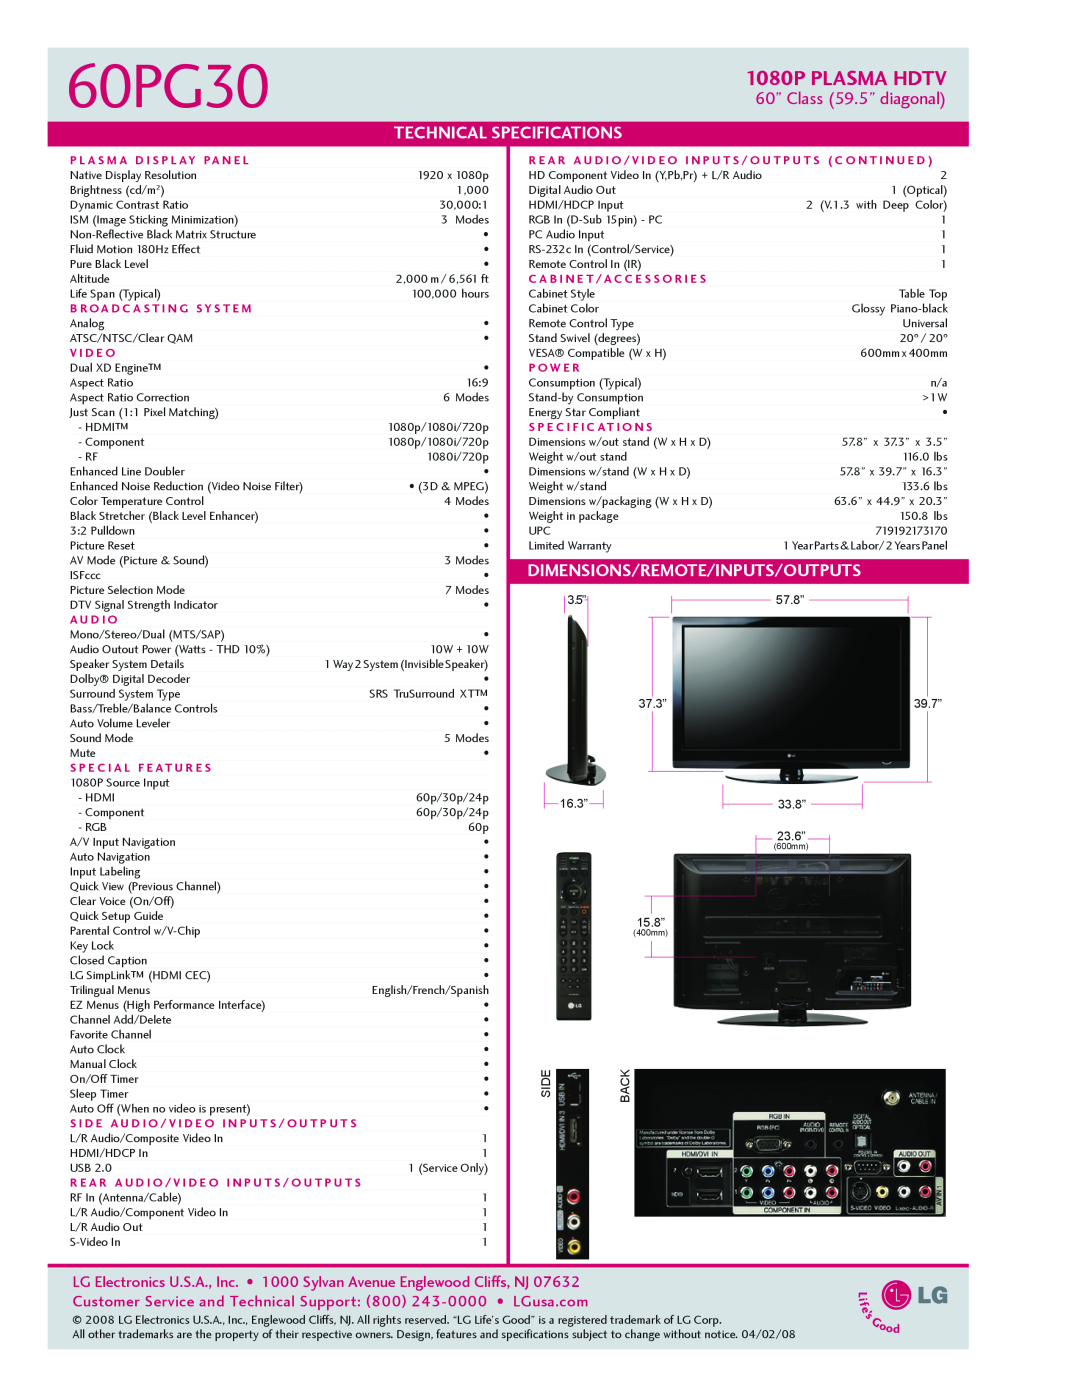 LG Electronics 60PG30 LG Electronics U.S.A., Inc. 1000 Sylvan Avenue Englewood Cliffs, NJ, 1080p PLASMA HDTV, Technical 